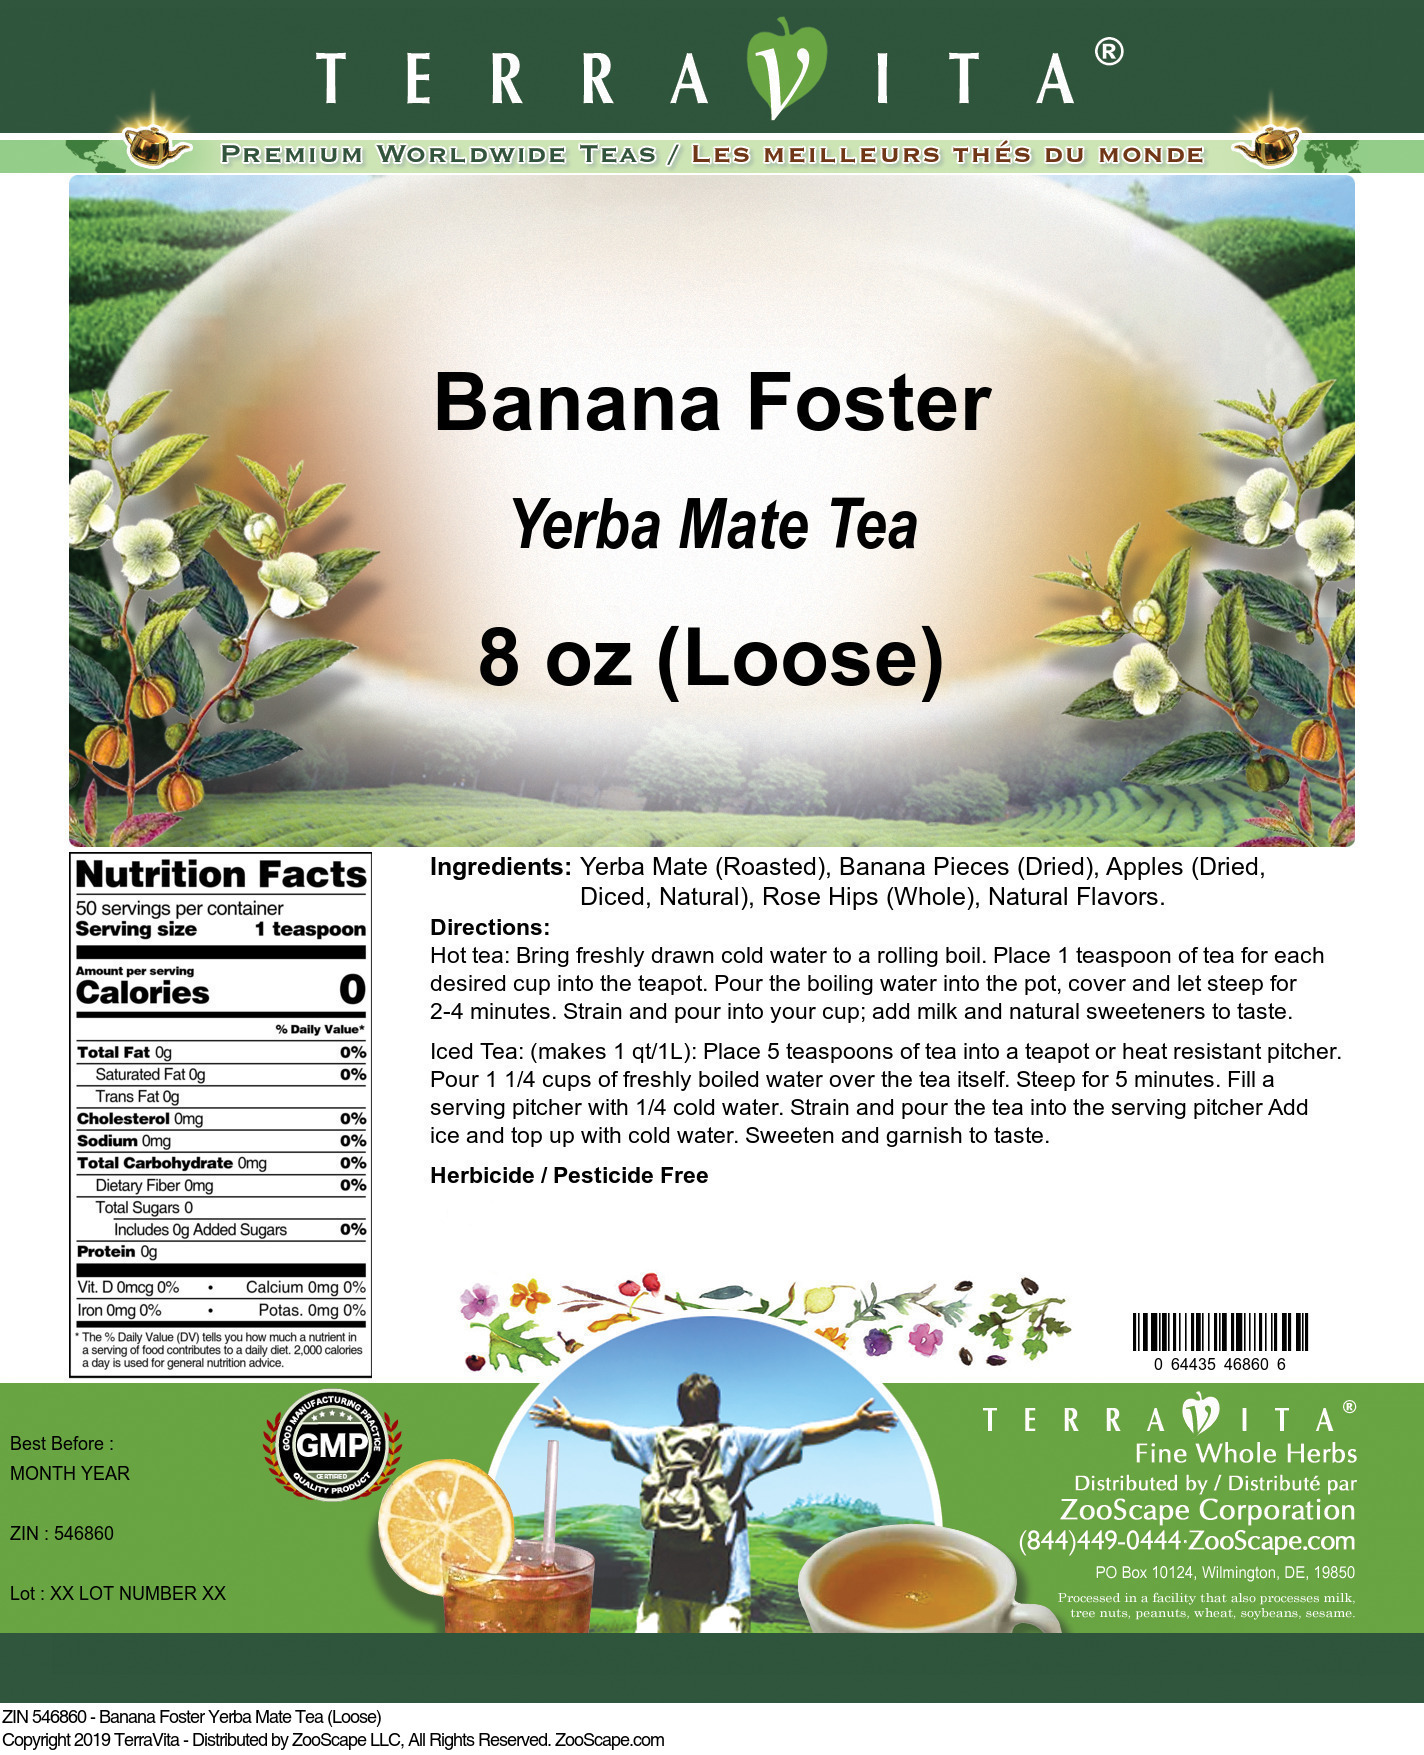 Banana Foster Yerba Mate Tea (Loose) - Label